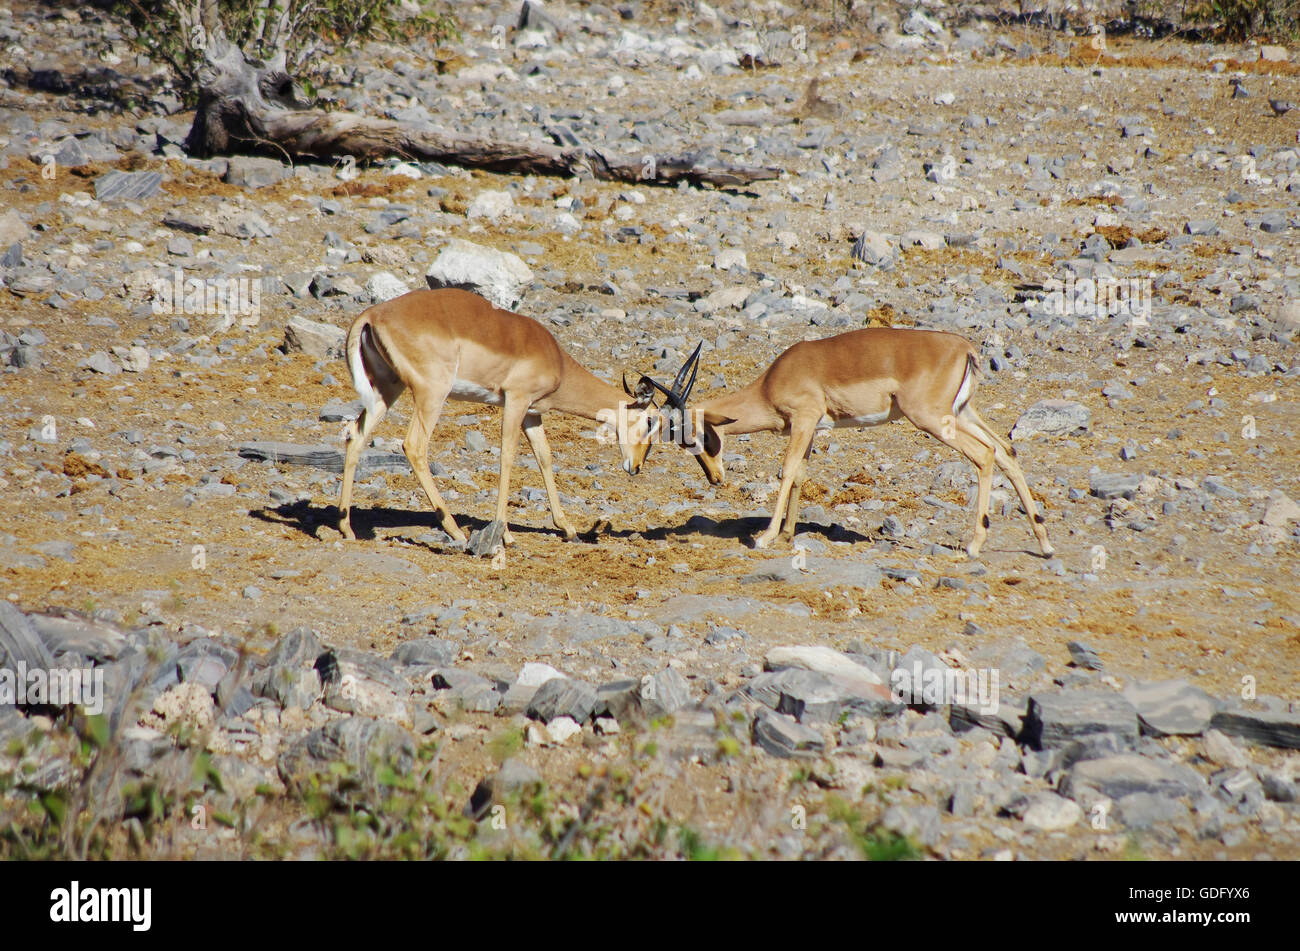 Gazelles fighting Stock Photo